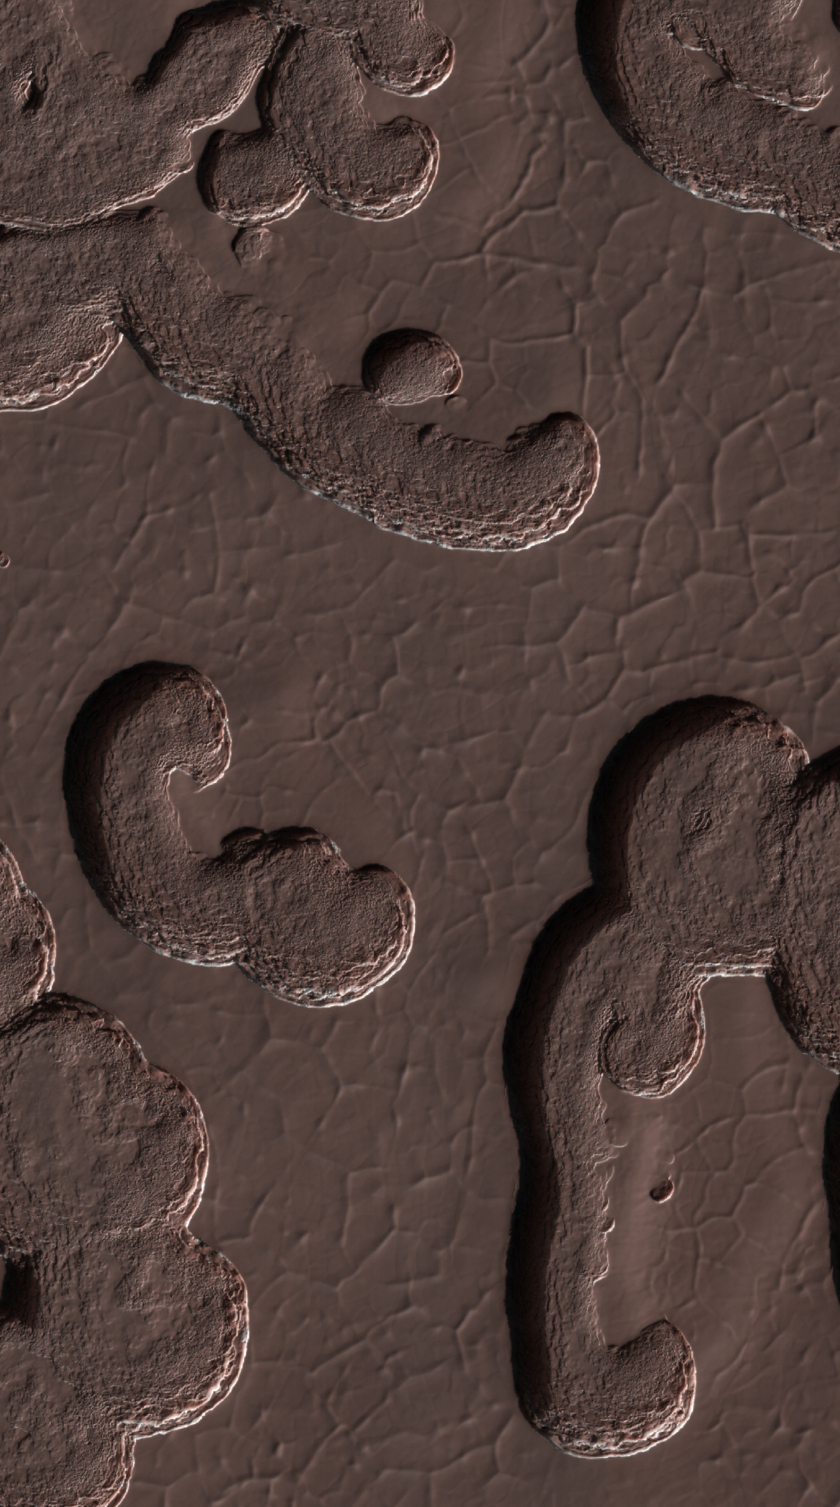 Mars South Polar Ice Cap Formations